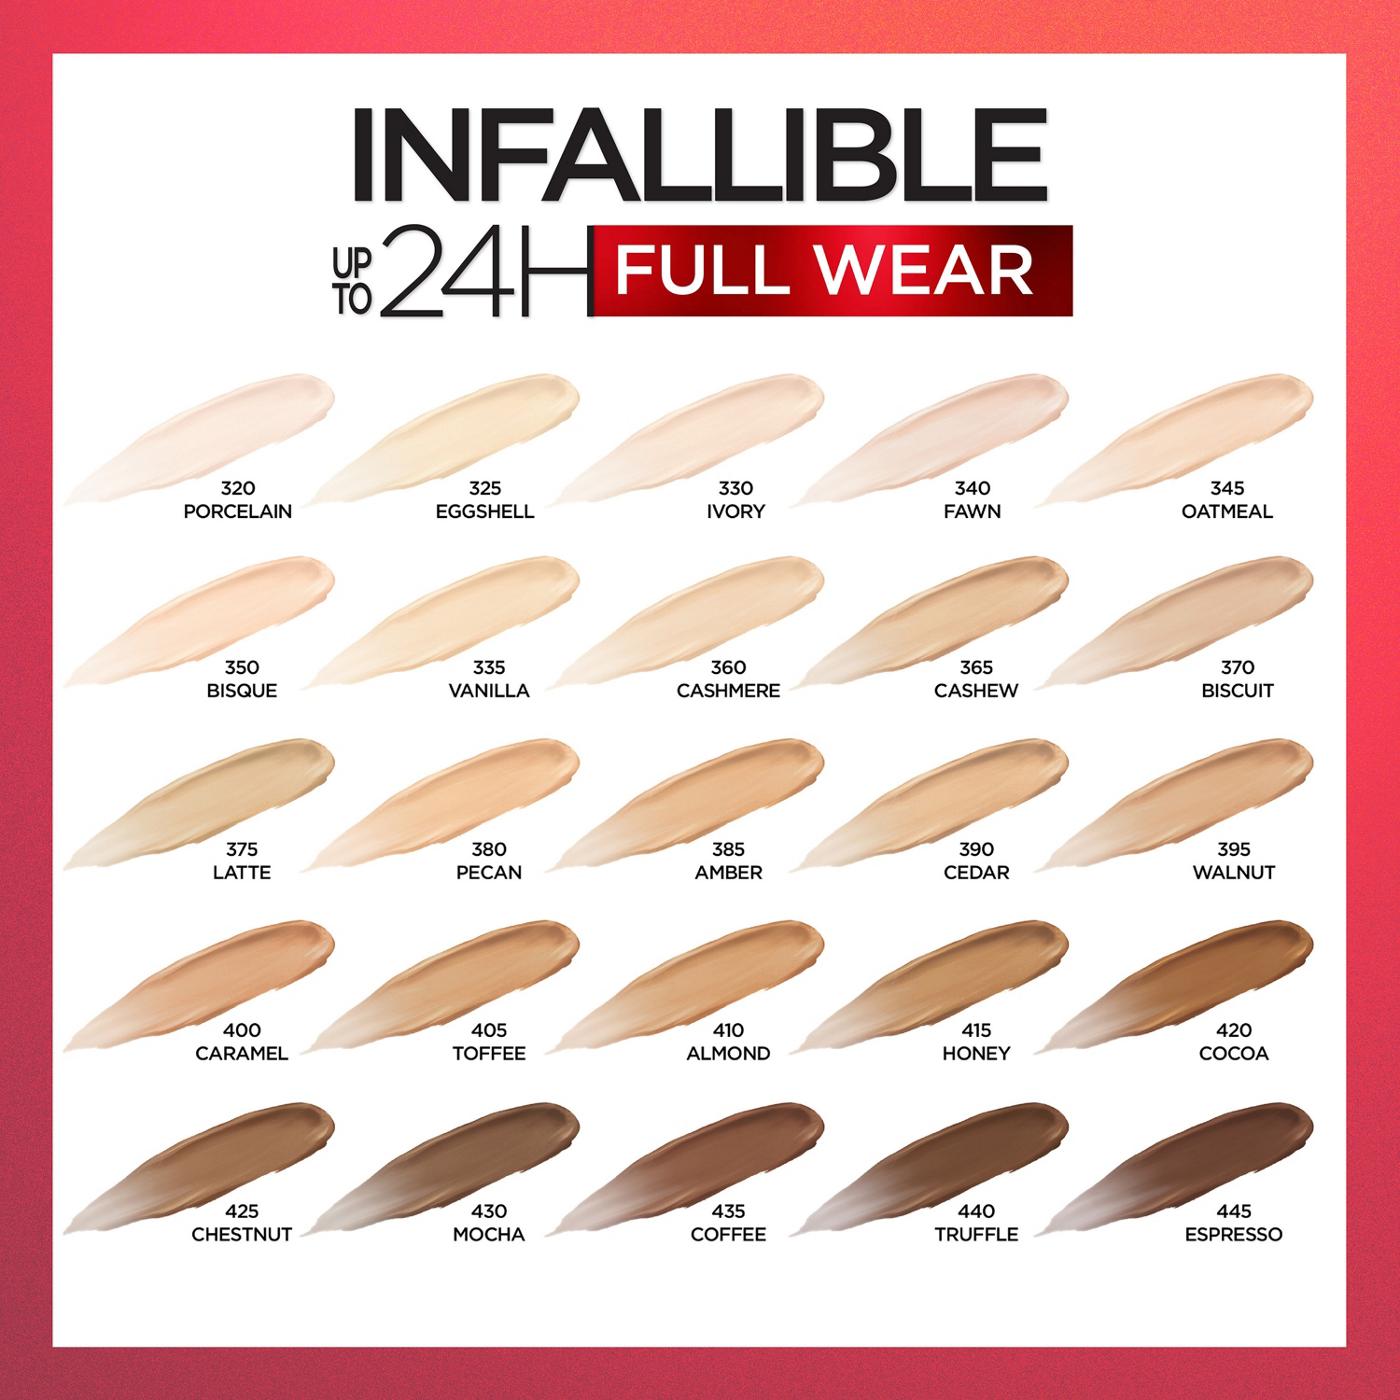 L'Oréal Paris Infallible Full Wear Concealer up to 24H Full Coverage Latte; image 7 of 7